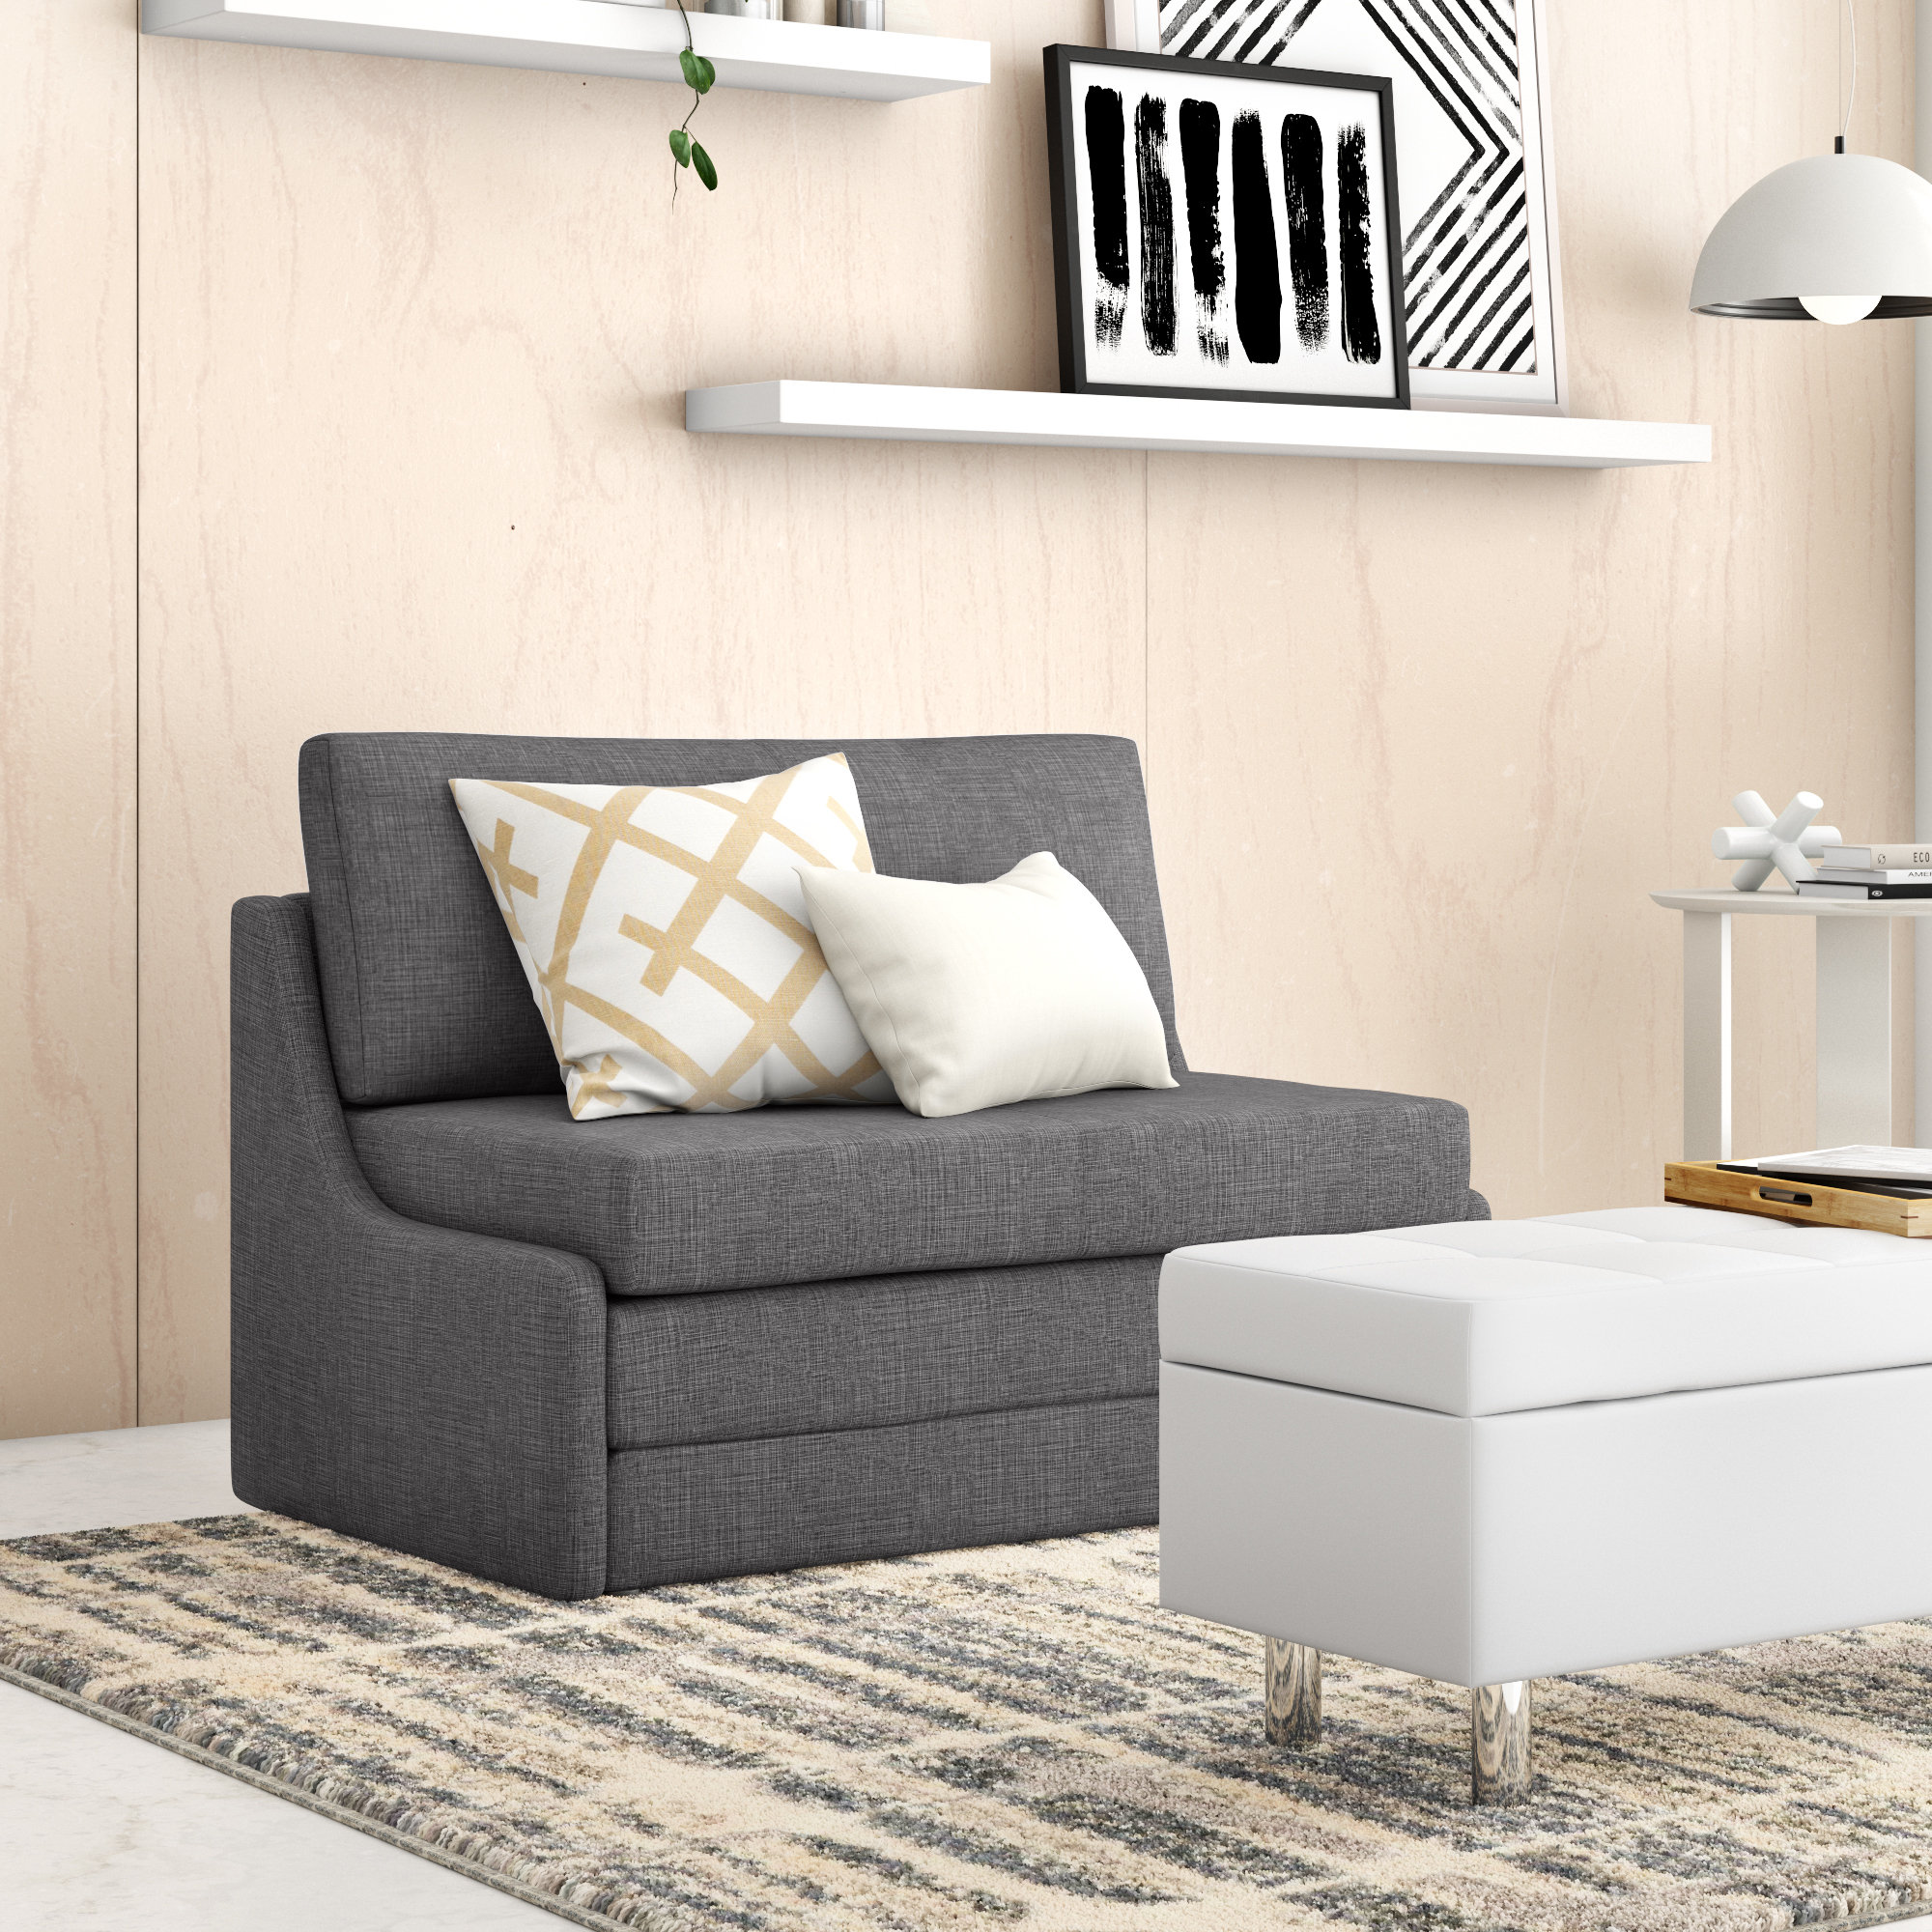 Zipcode Design Sabine 43 31 Armless Sofa Bed Reviews Wayfair Ca